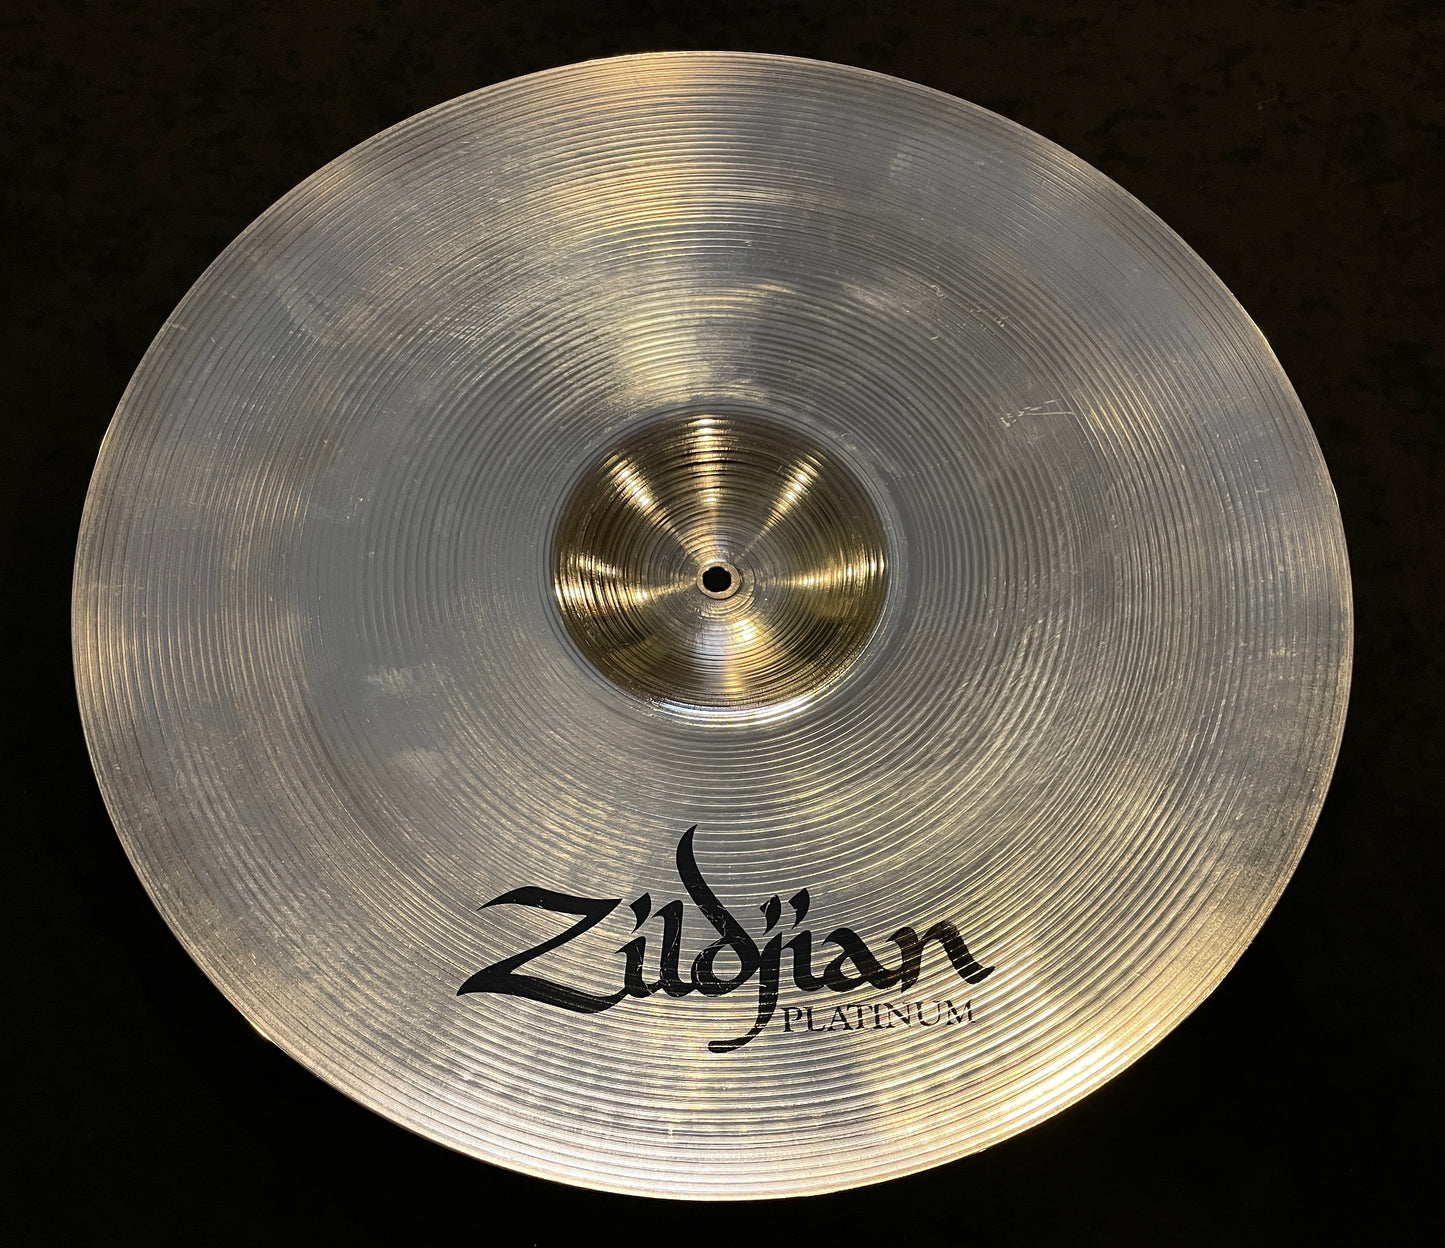 20" Zildjian Platinum Medium Crash Cymbal 2374g